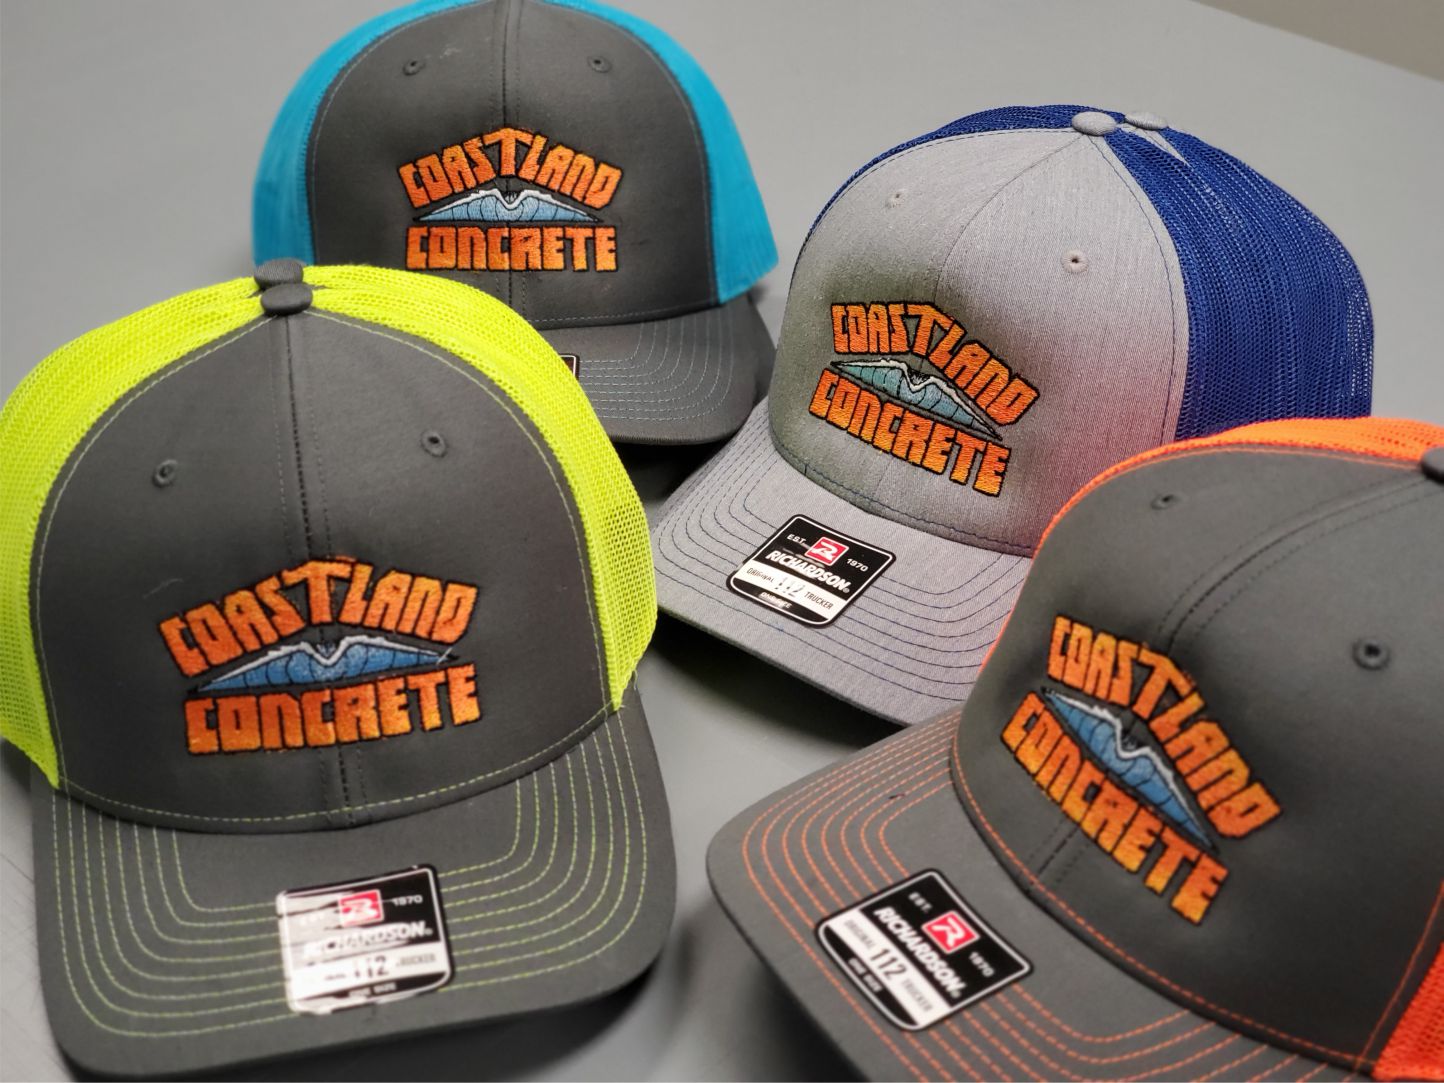 Coastland Concrete Hats